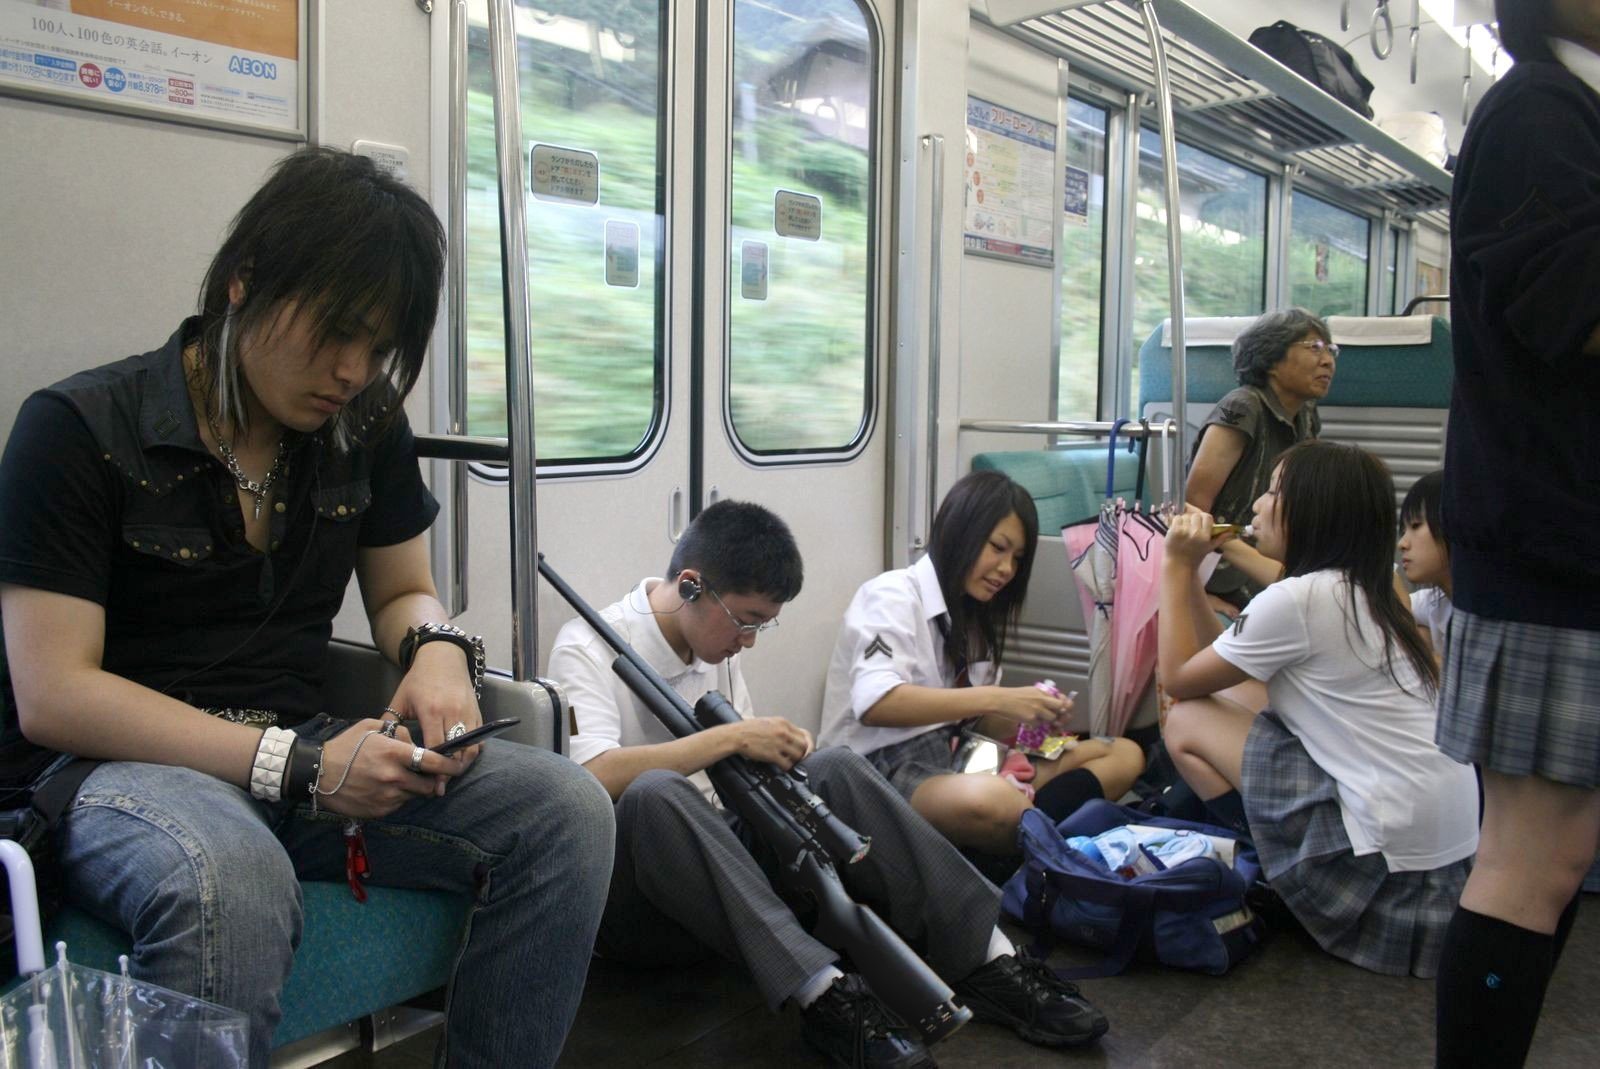 Извращенец в метро. Японцы в транспорте. Японский общественный транспорт. Японские девушки в общественном транспорте. Японское метро.